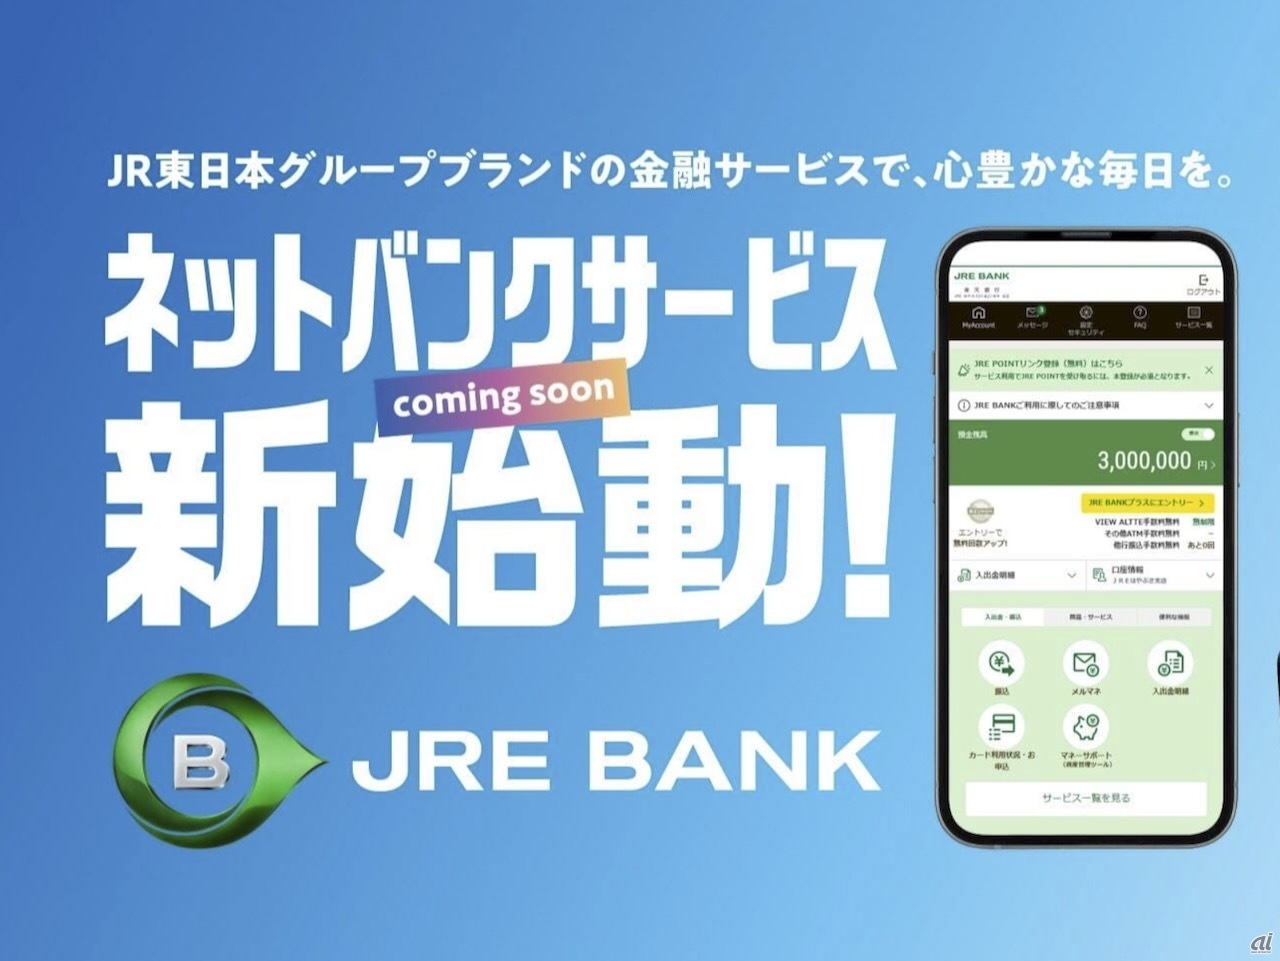 JR東日本のネット銀行「JRE BANK」5月始動